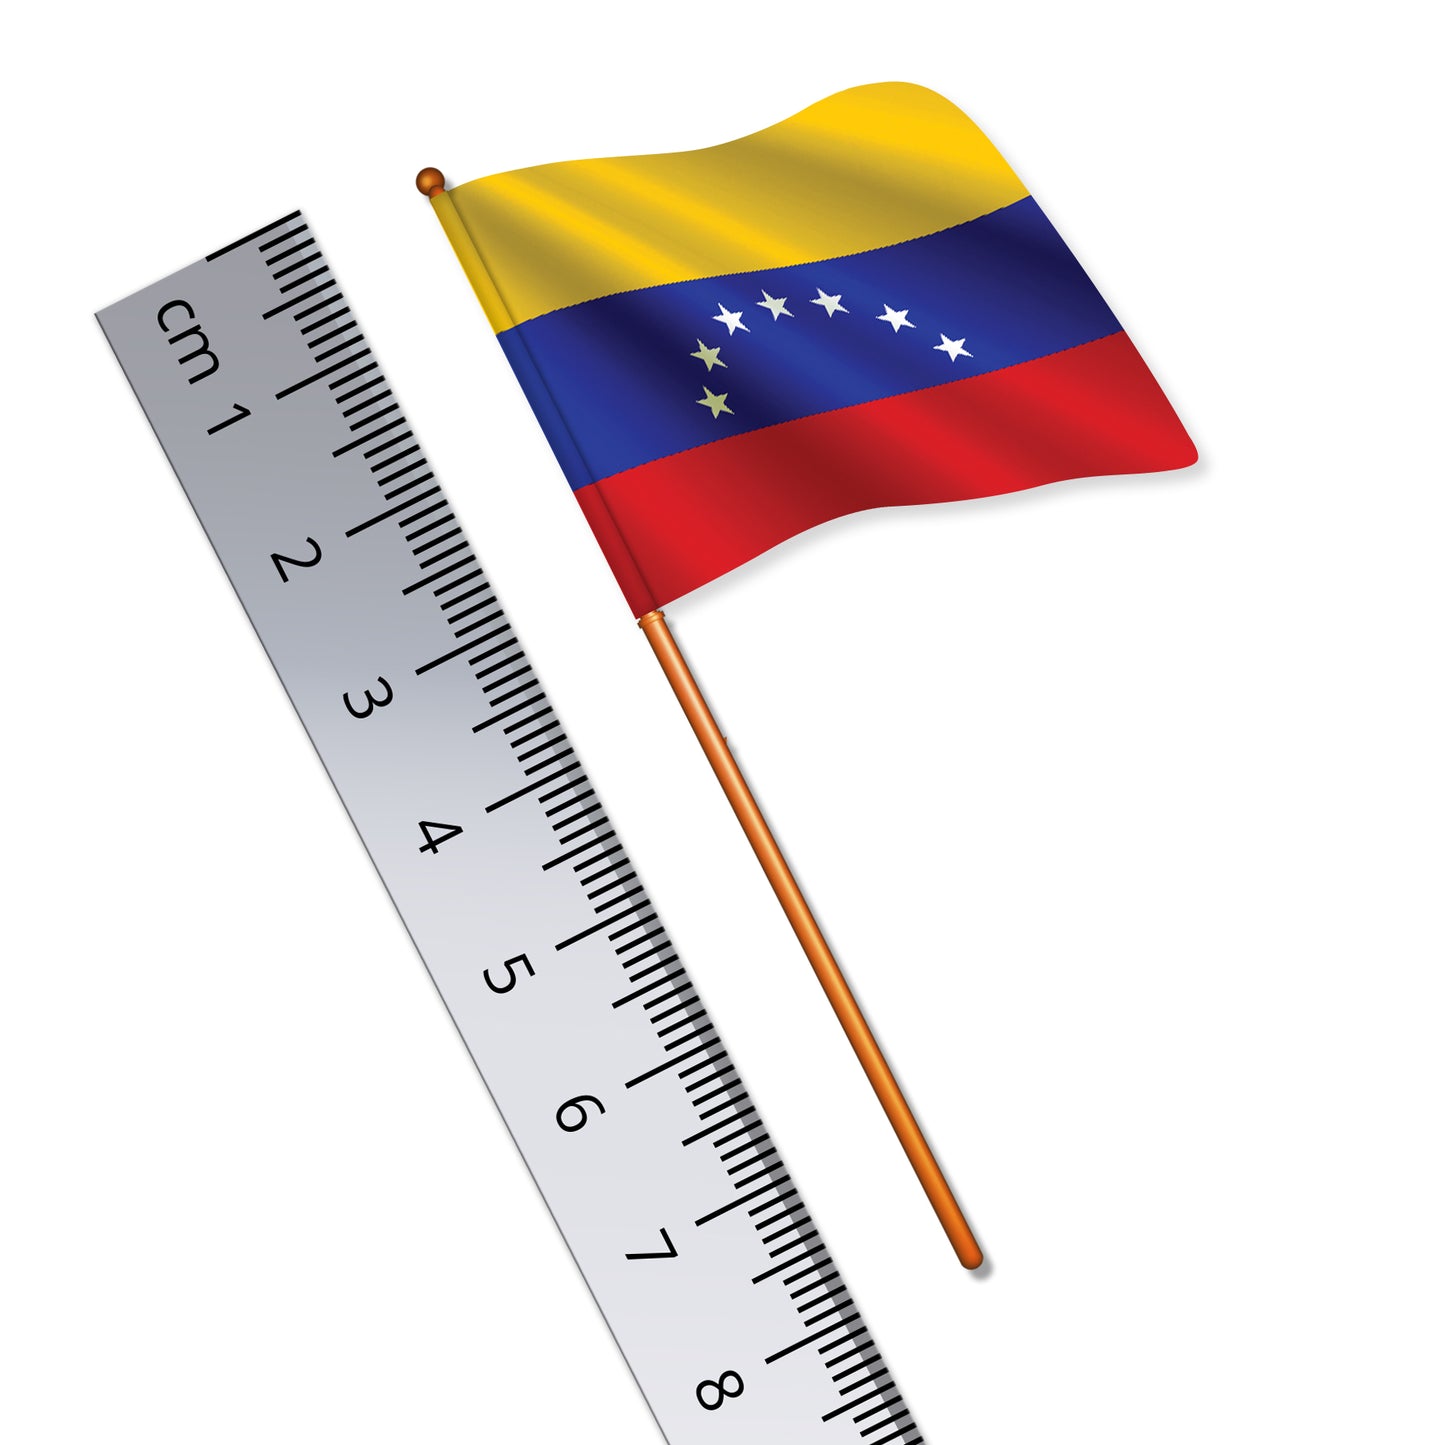 Venezuelan Flag (National Flag of Venezuela)